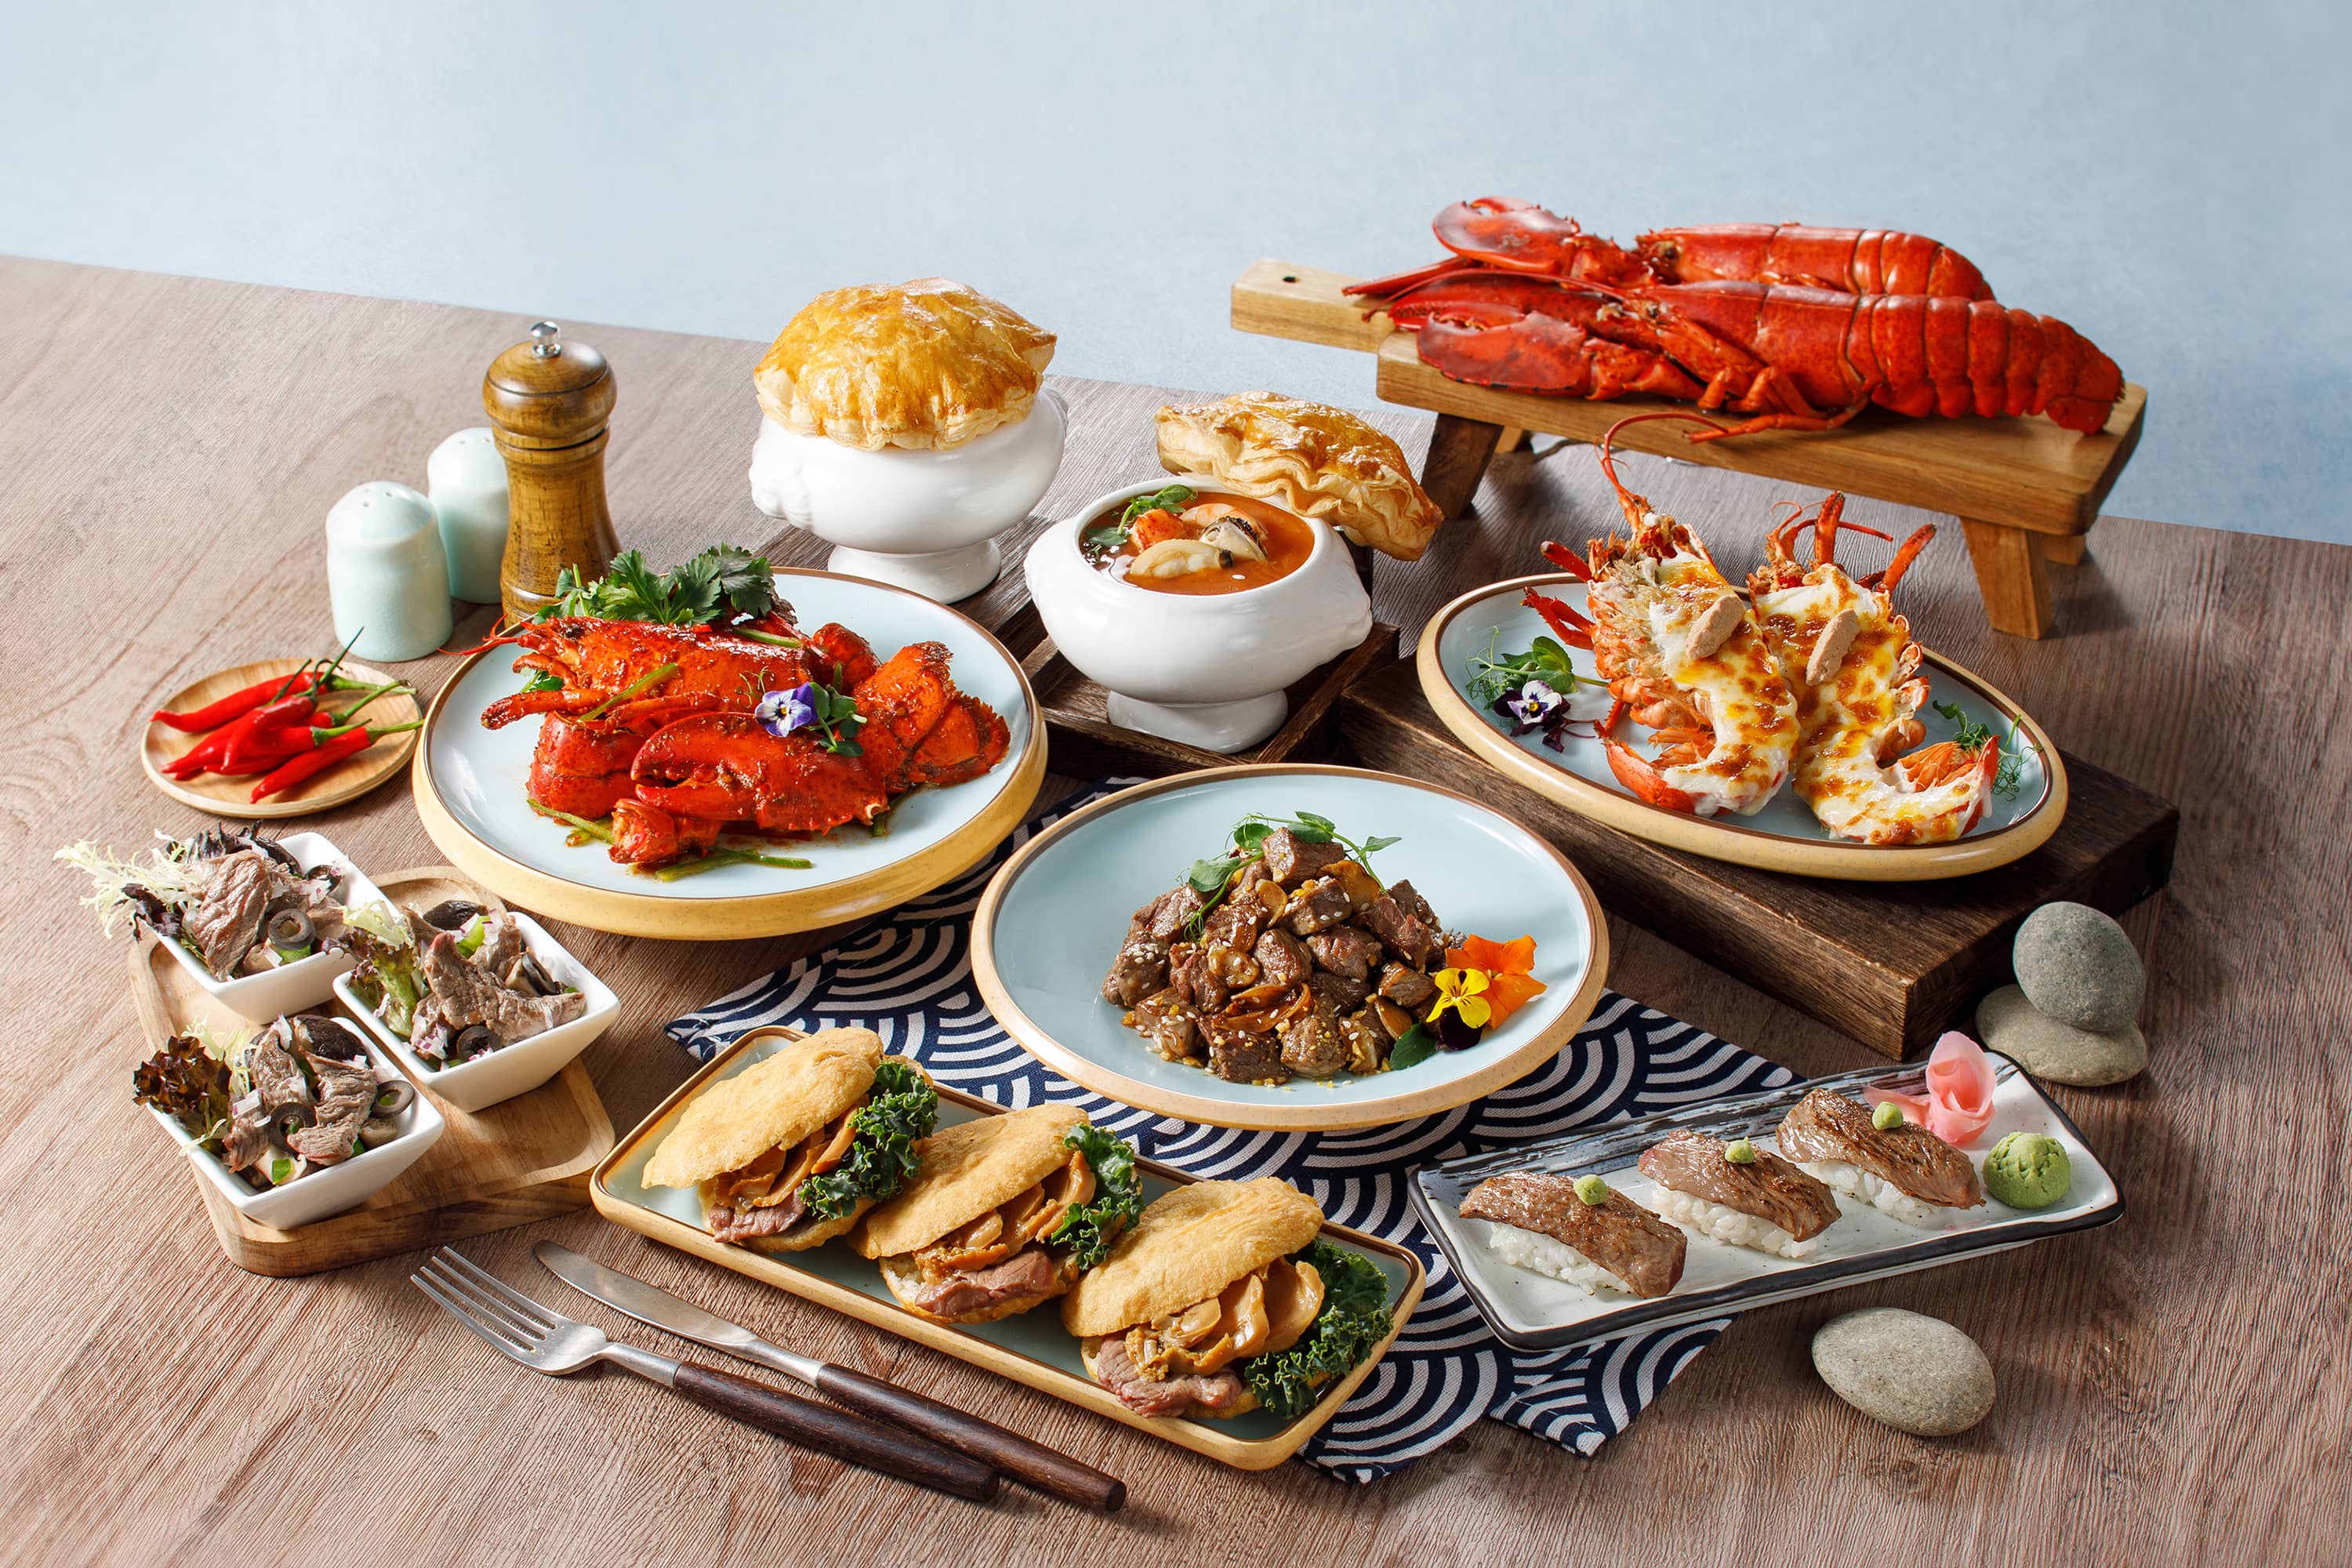 Wagyu and Lobster Seafood Dinner Buffet at Park Hotel Hong Kong